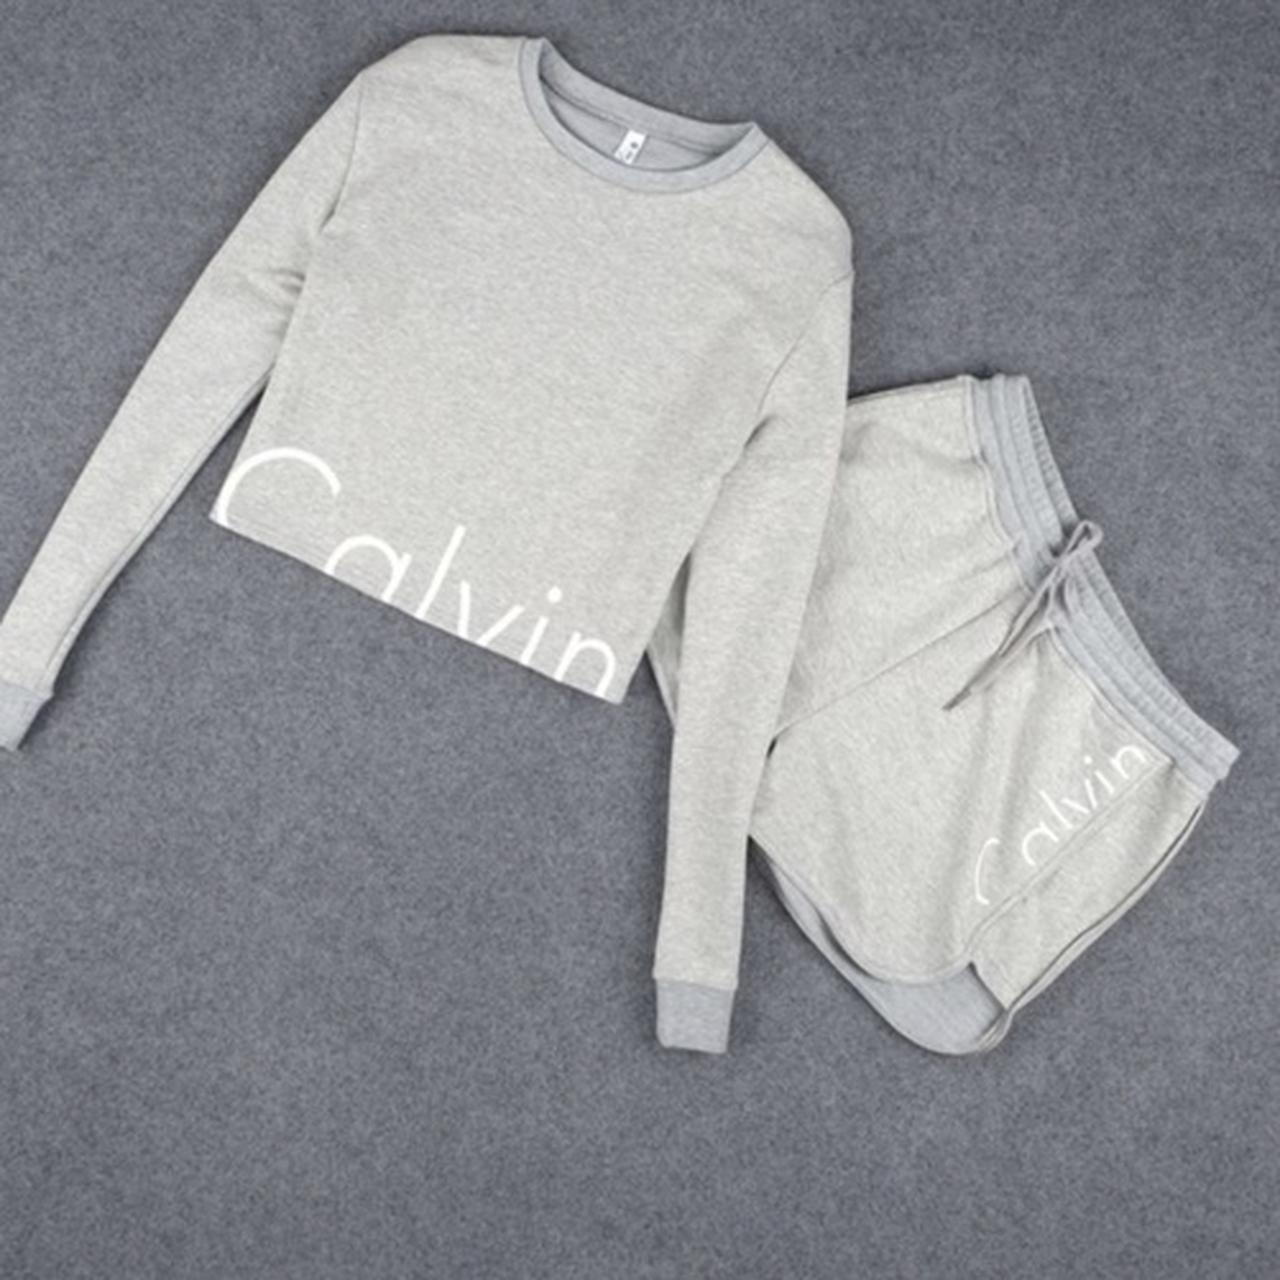 Calvin Klein lounge set women's 1 piece : sweatshirt - Depop